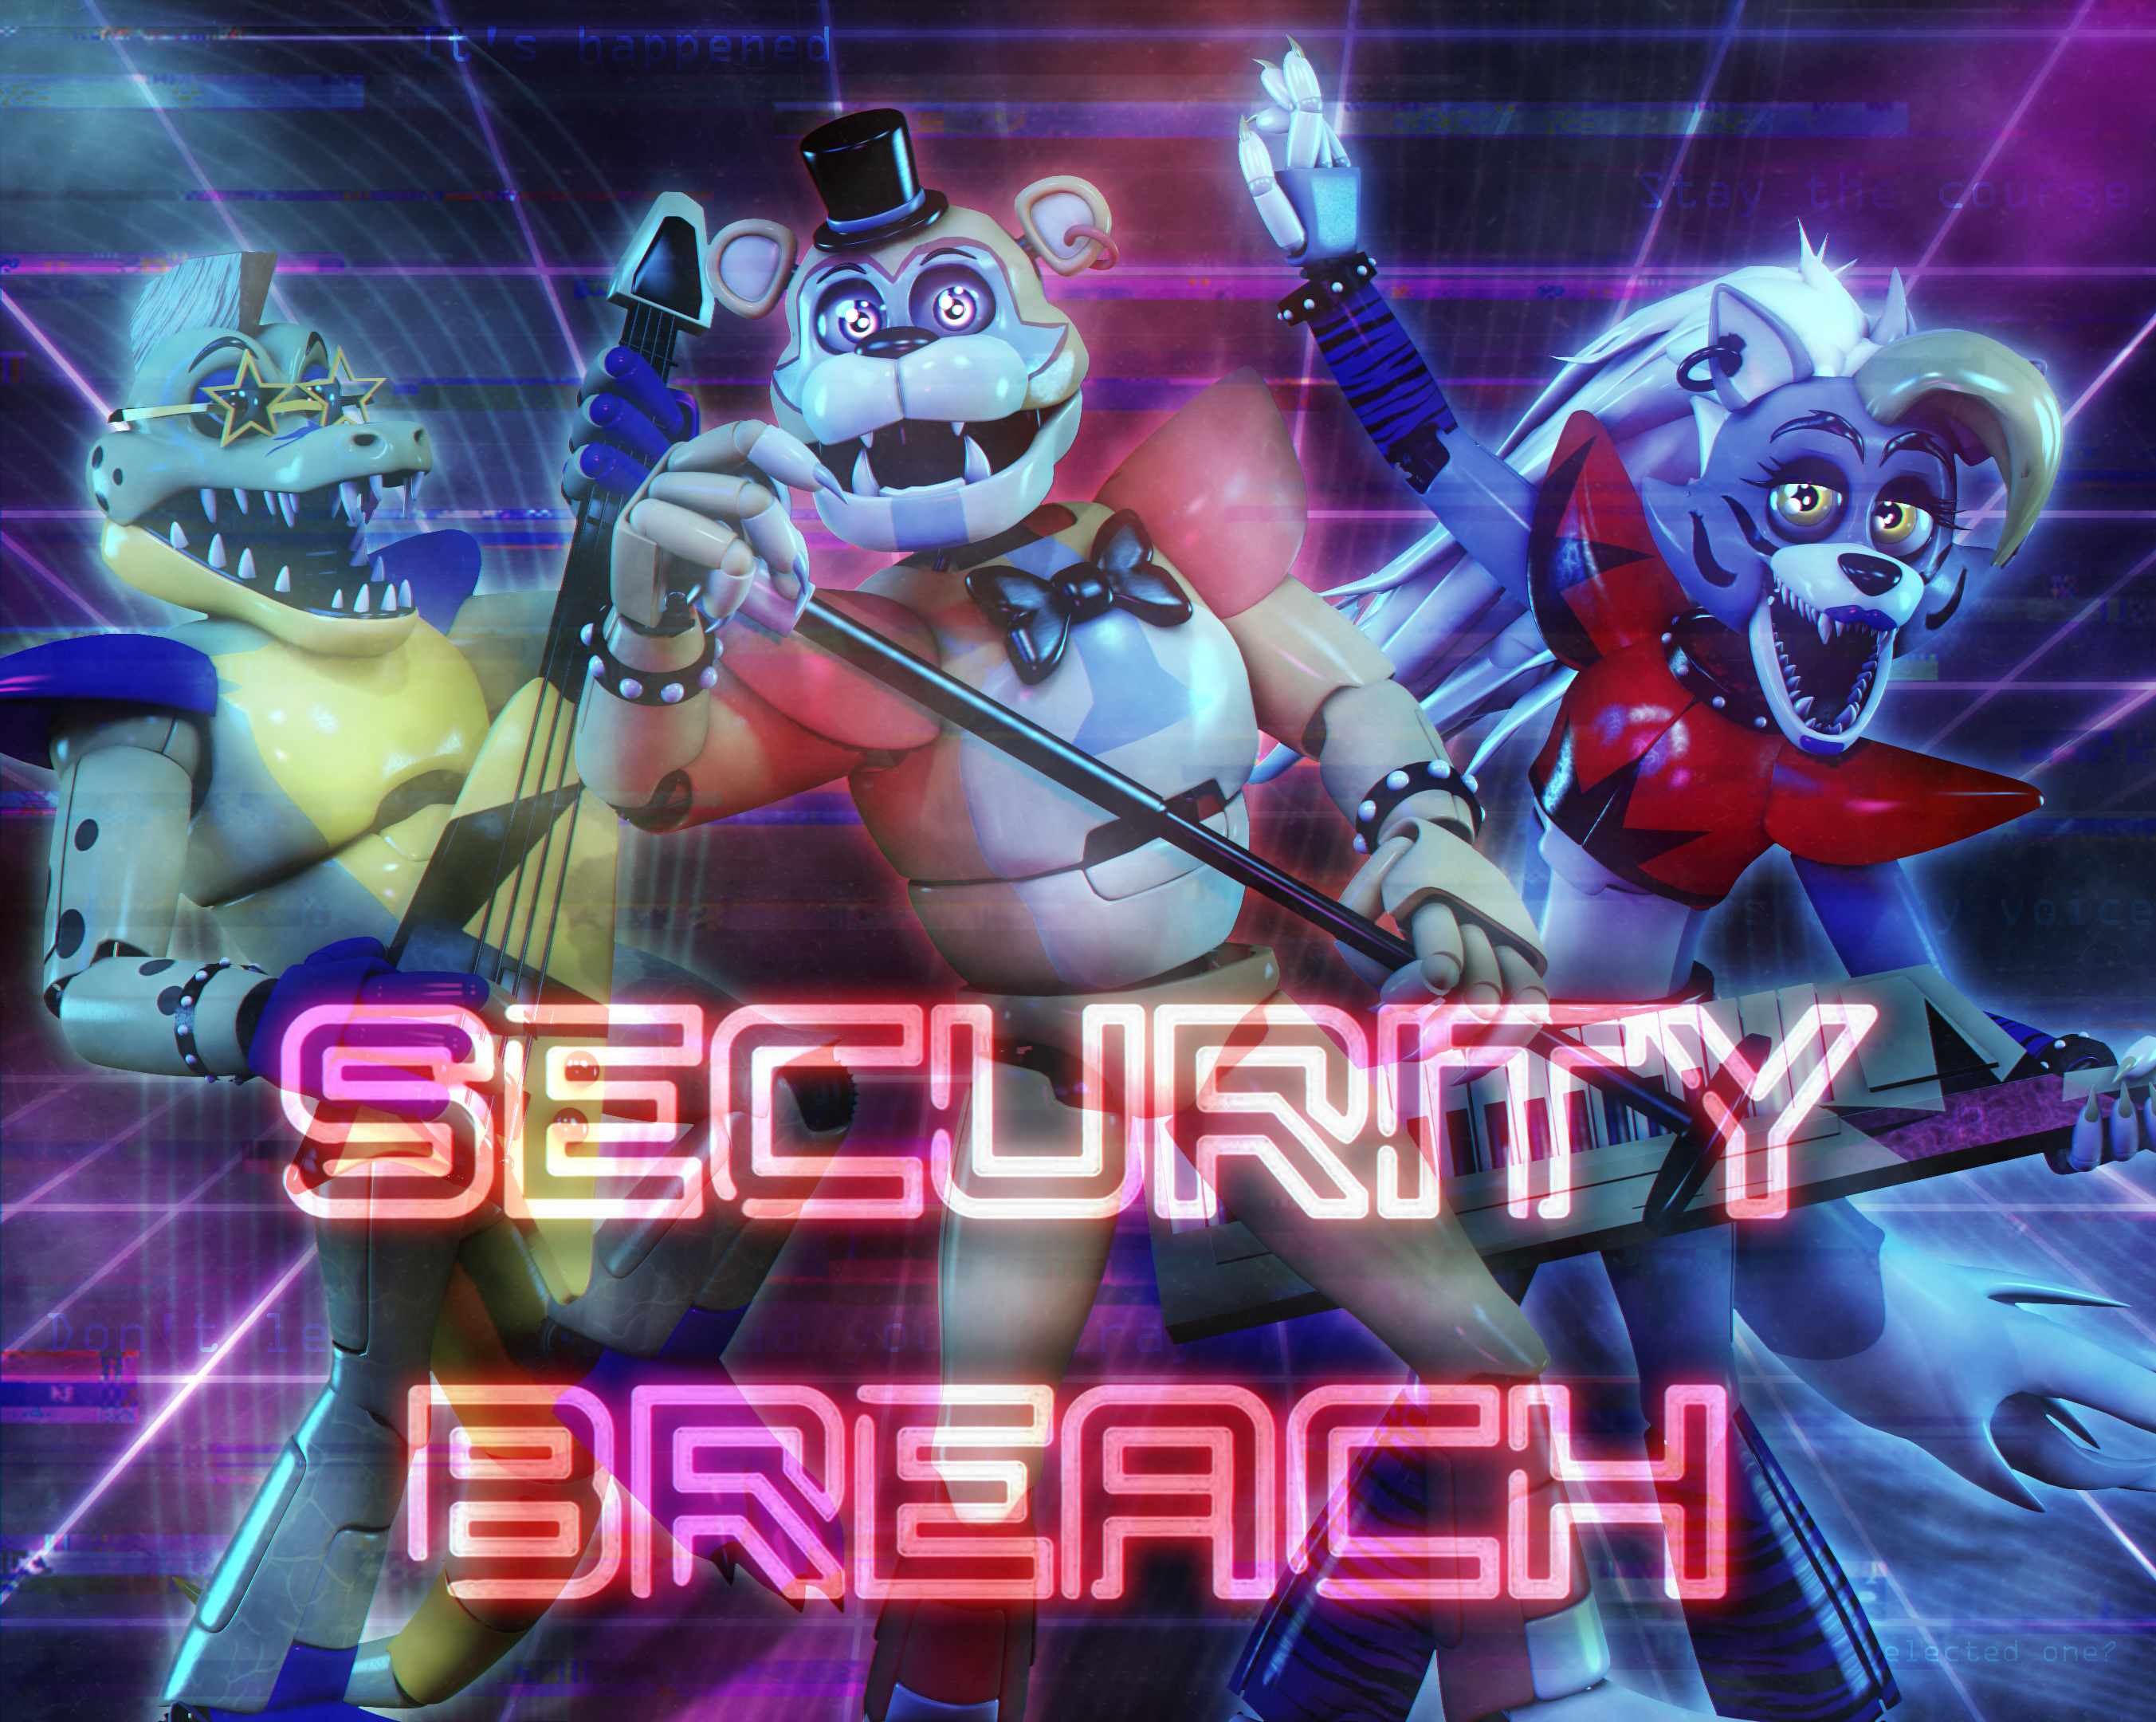 Security Breach Poster by FuntimeFreddoFazbear on DeviantArt